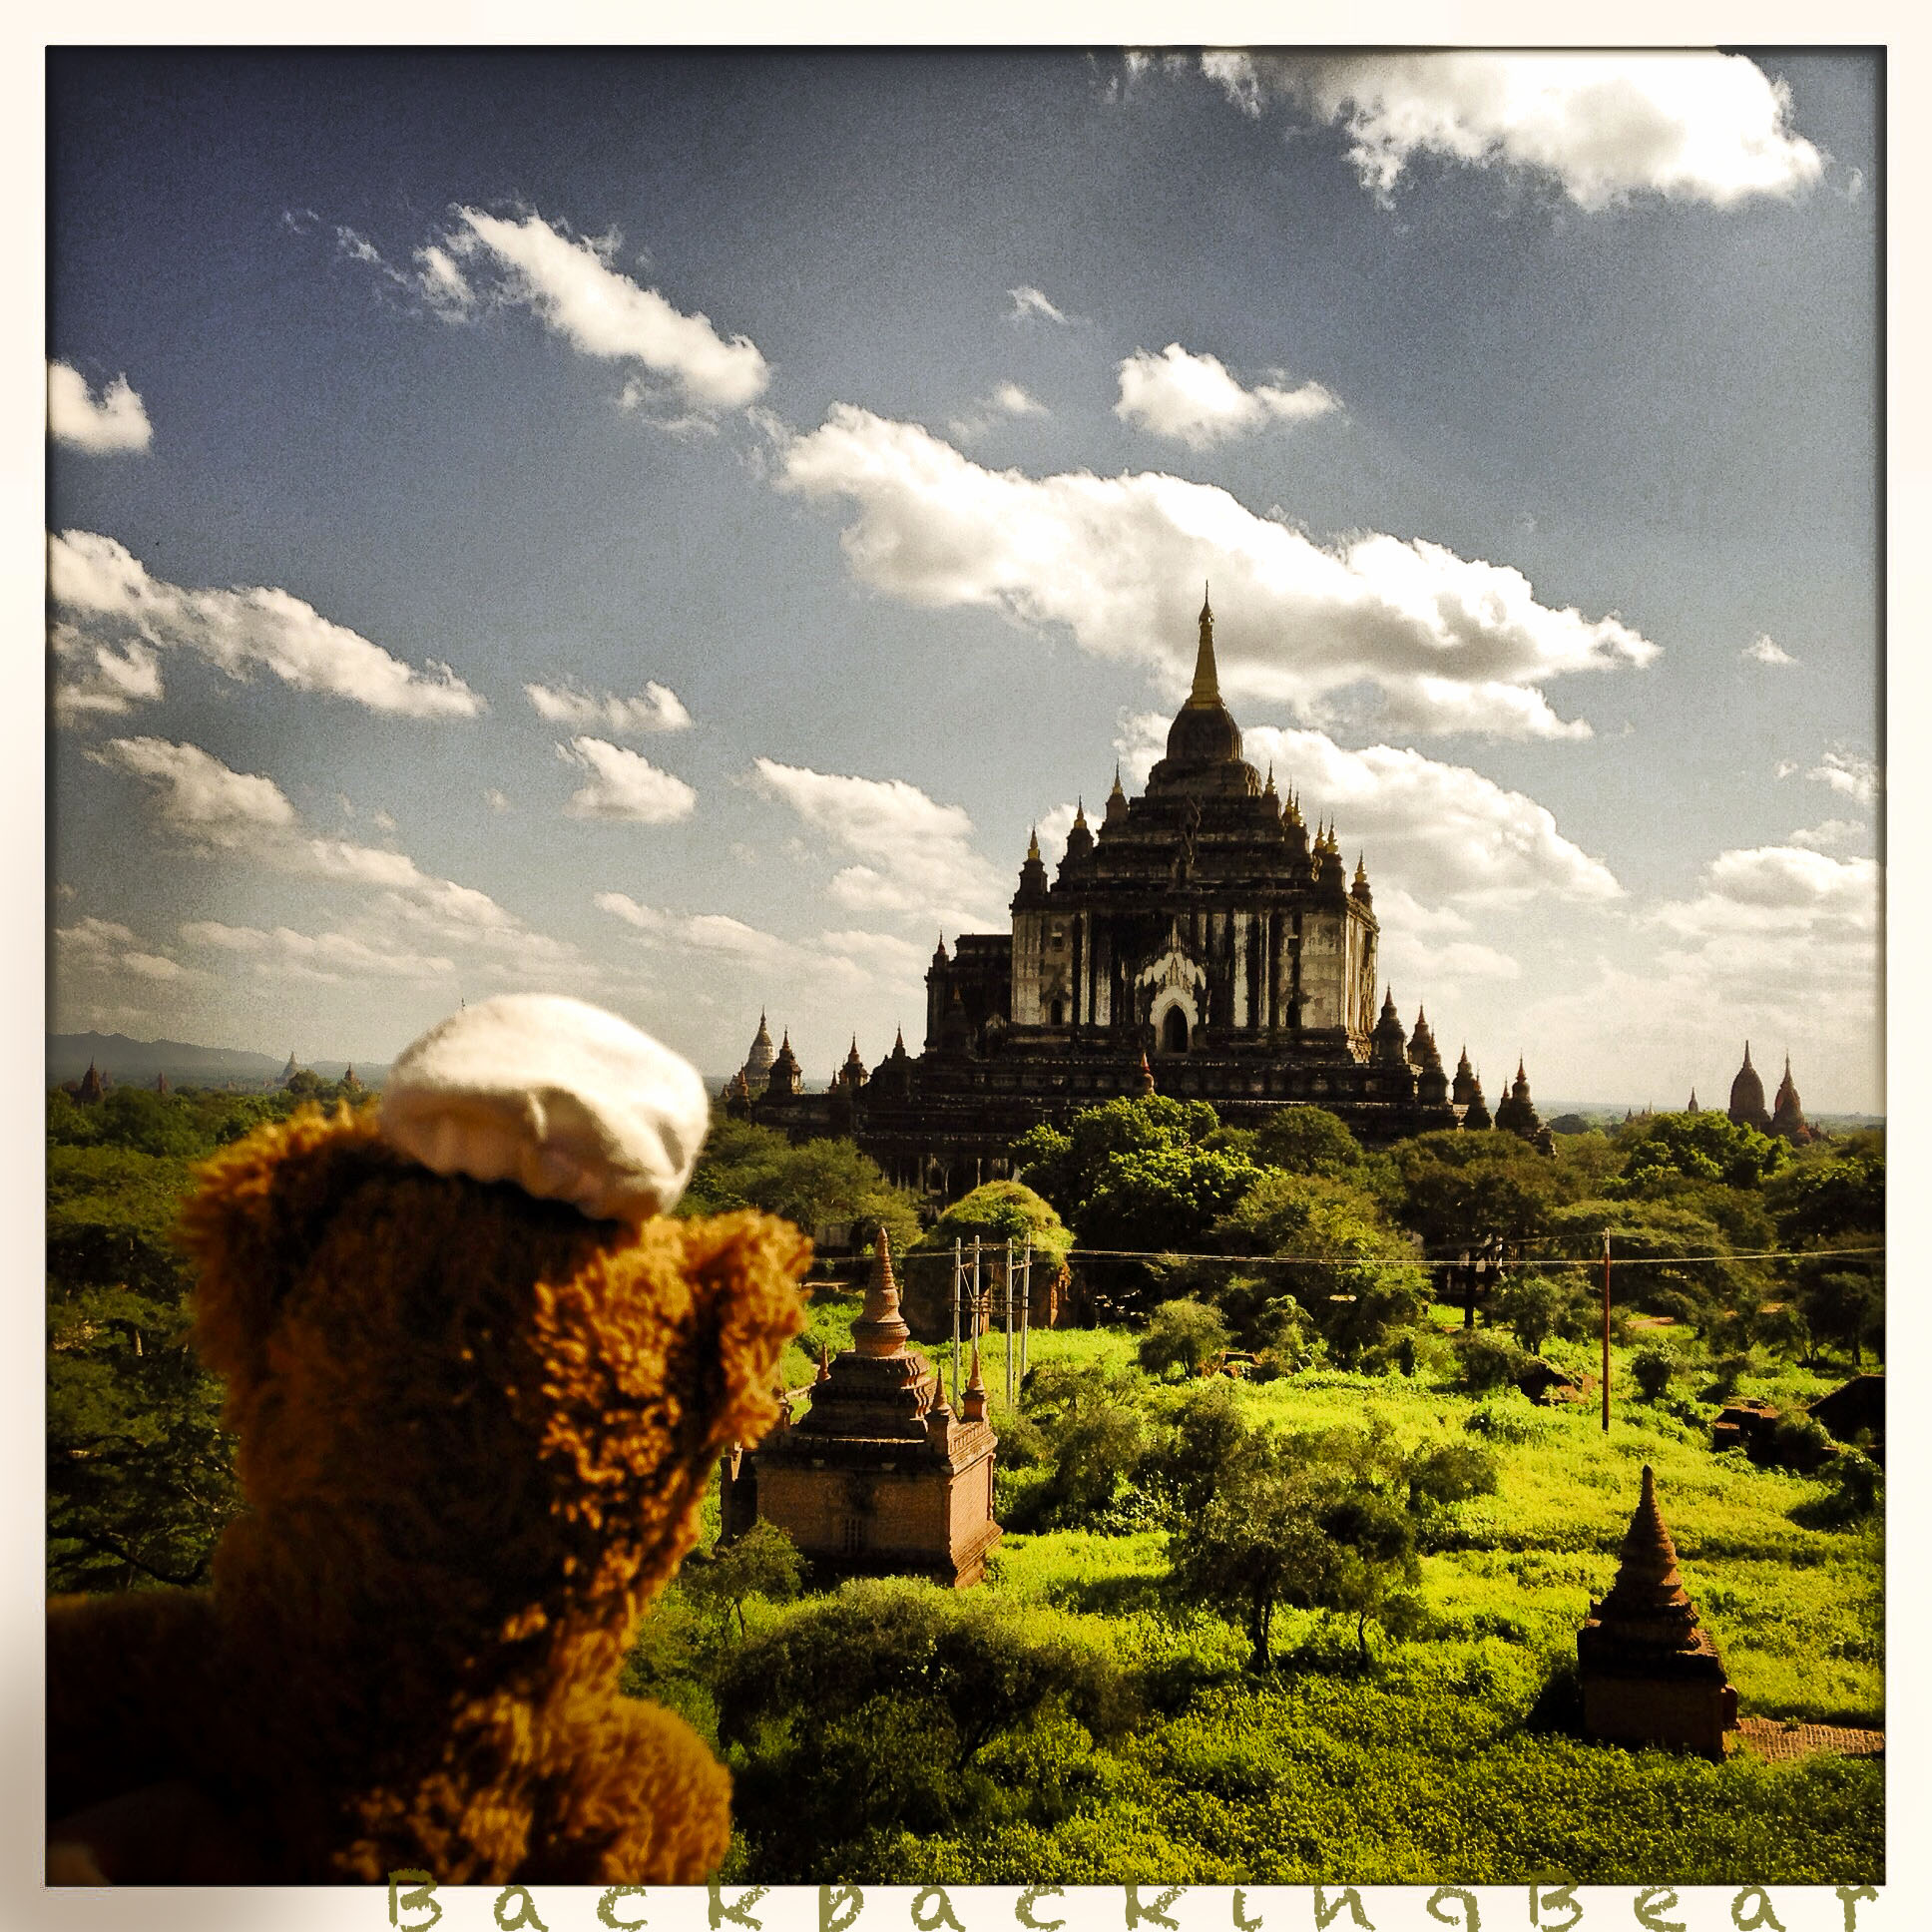 Travel Guide to Burma